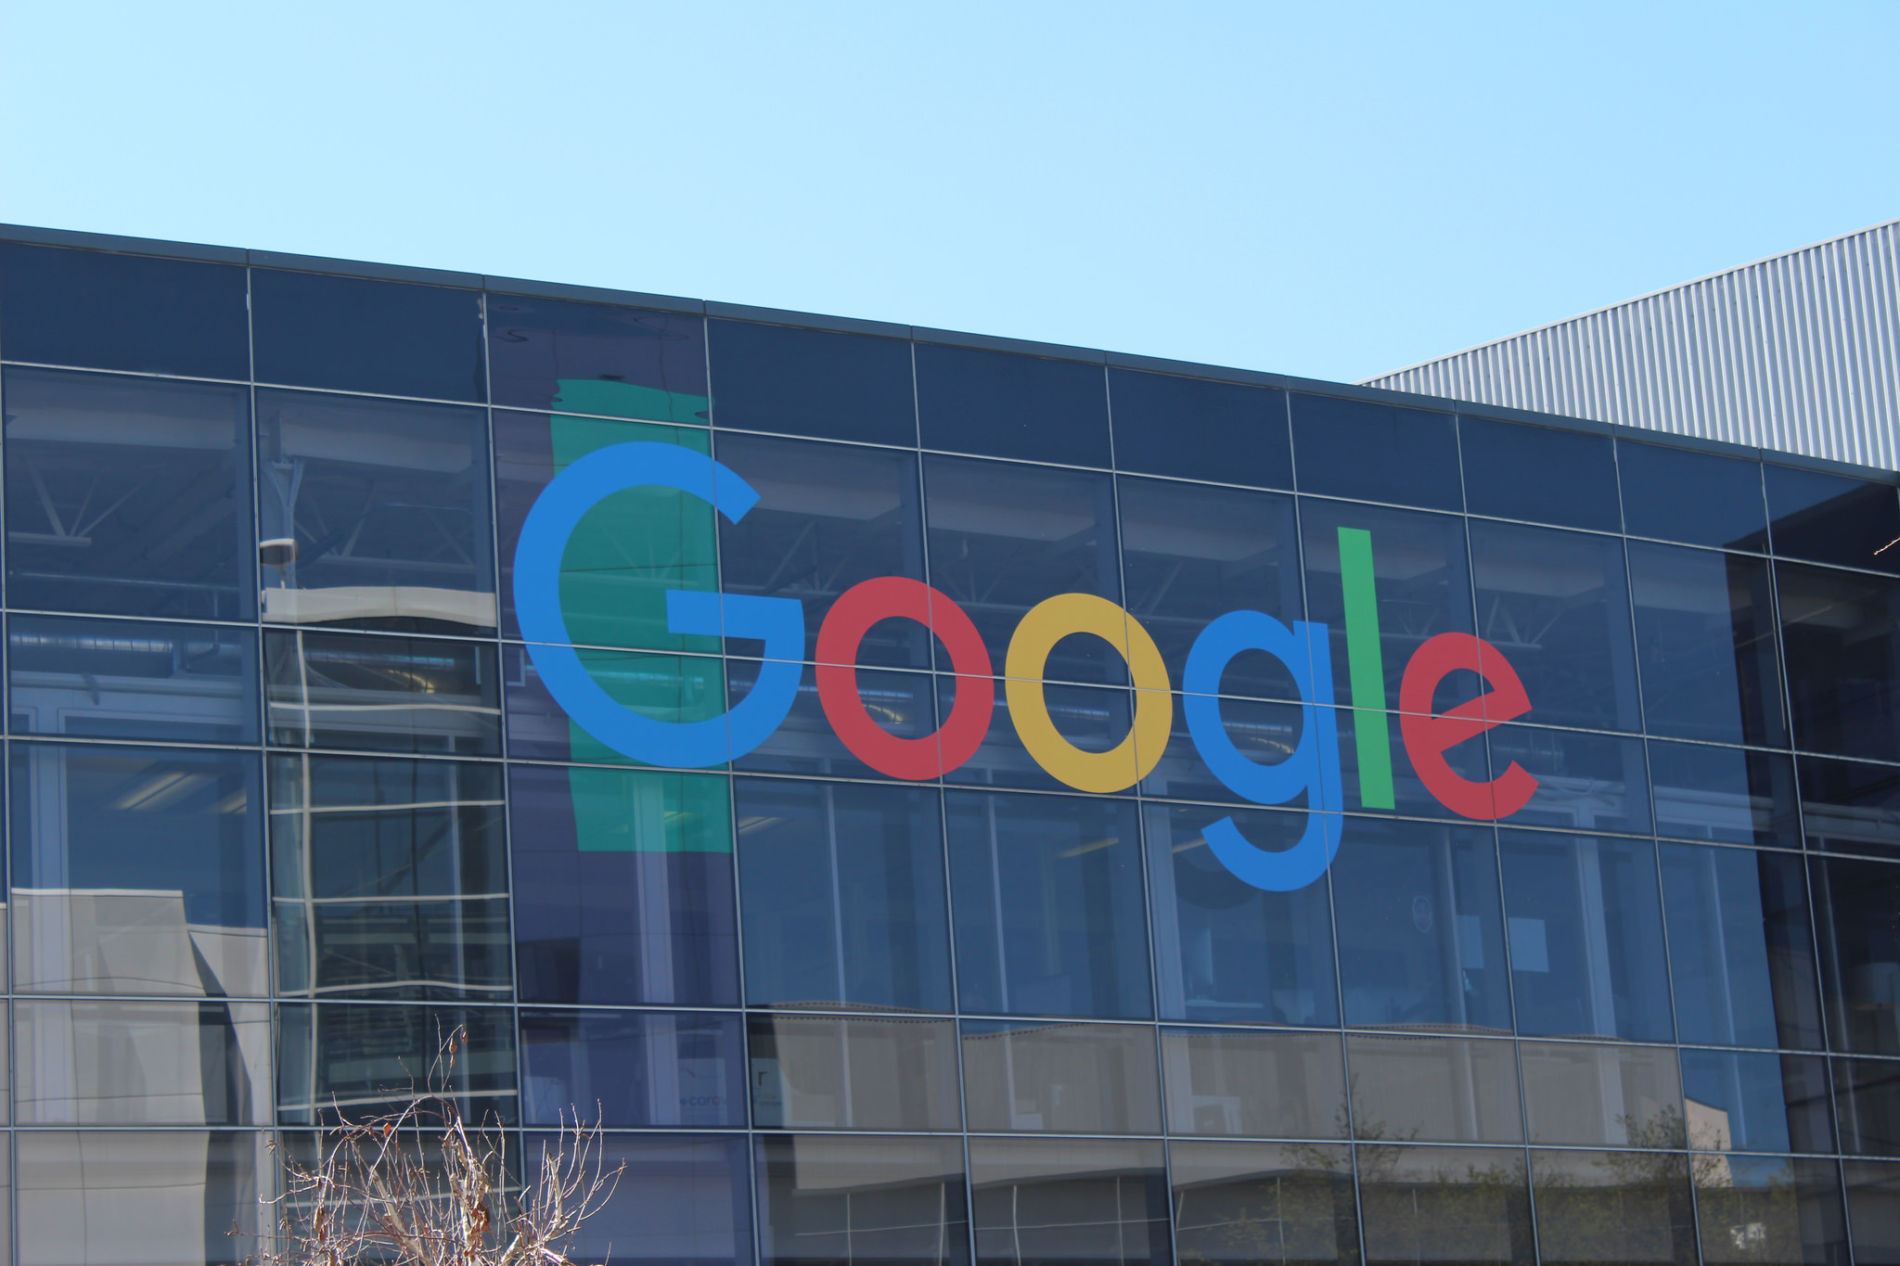 Google HQ by Ben Nuttall